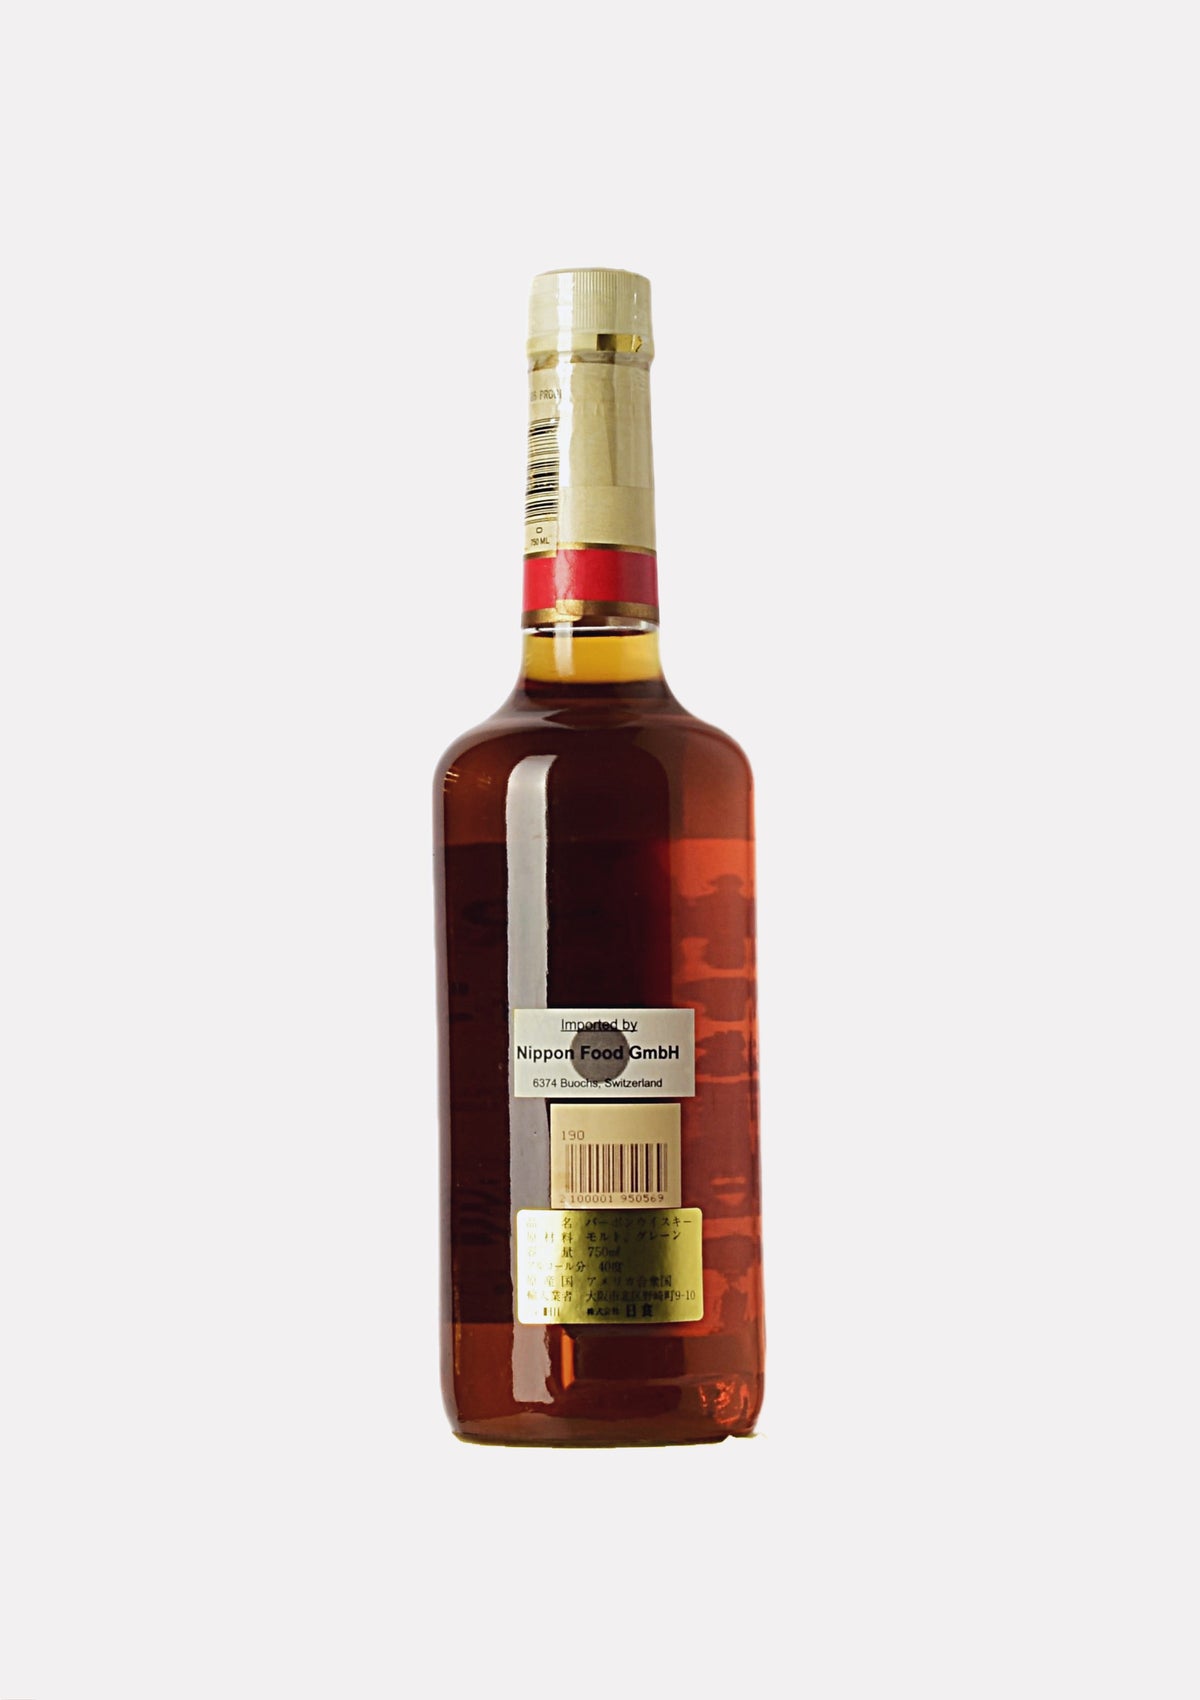 Orchard Springs Kentucky Straight Bourbon Whiskey